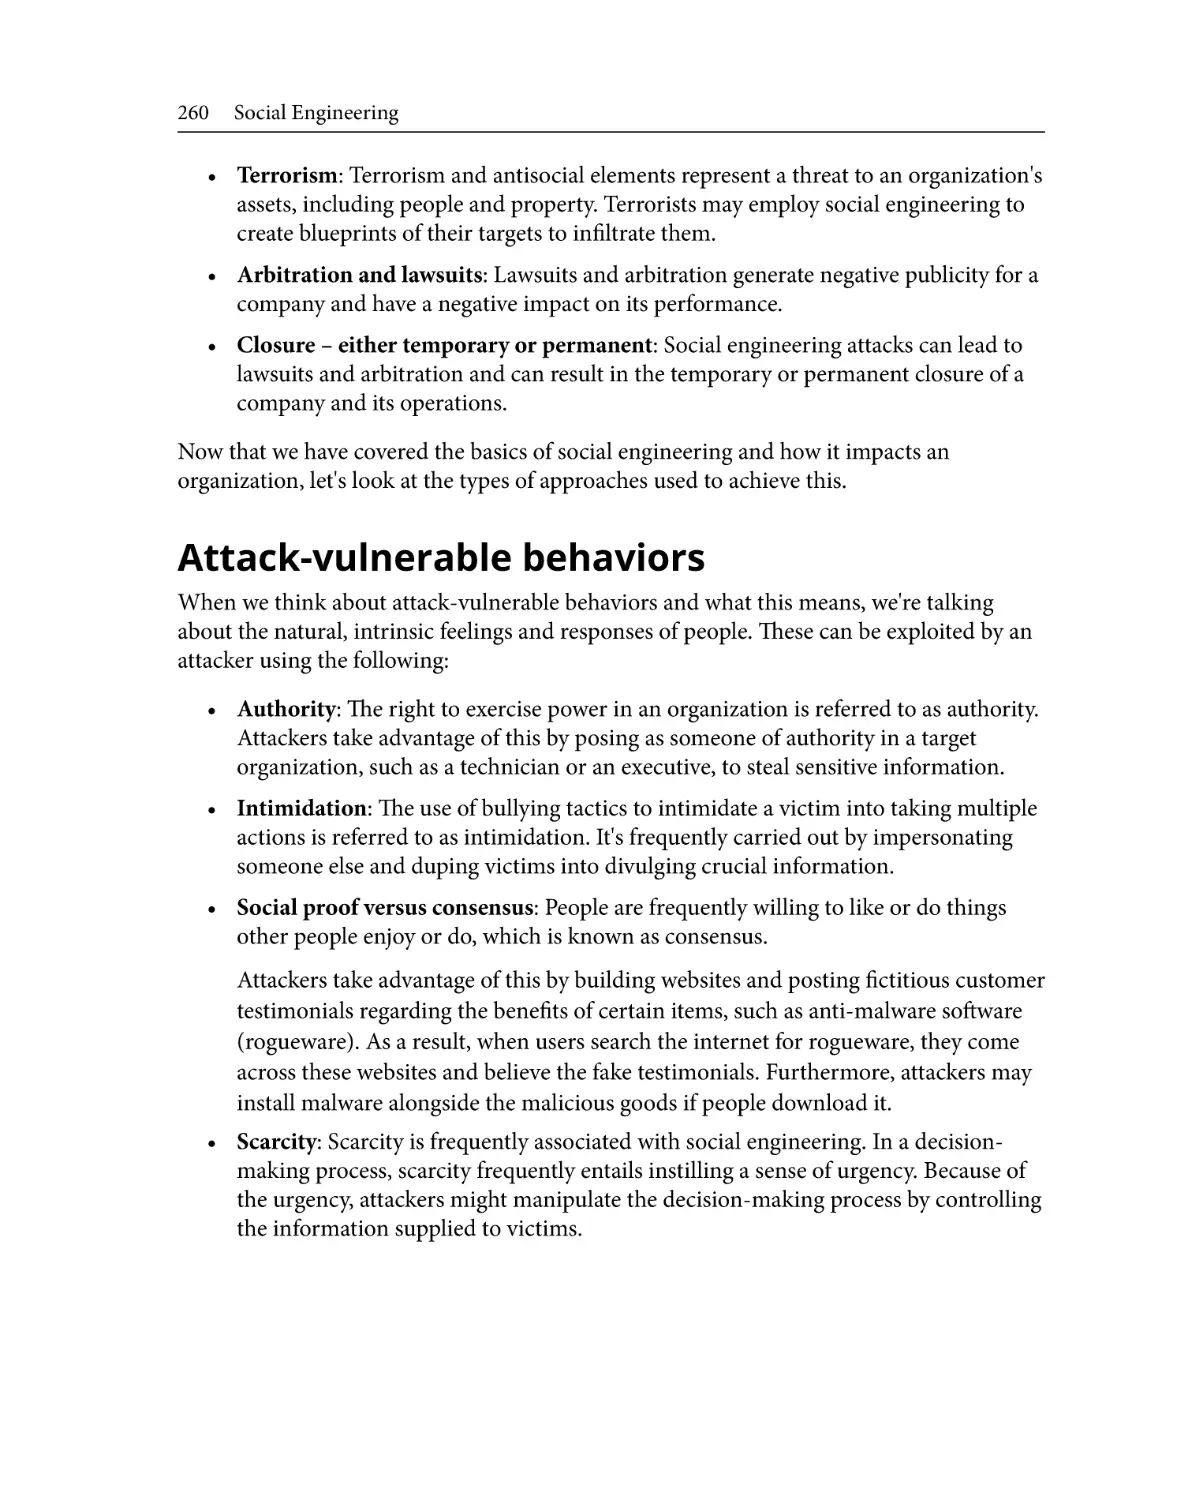 Attack-vulnerable behaviors